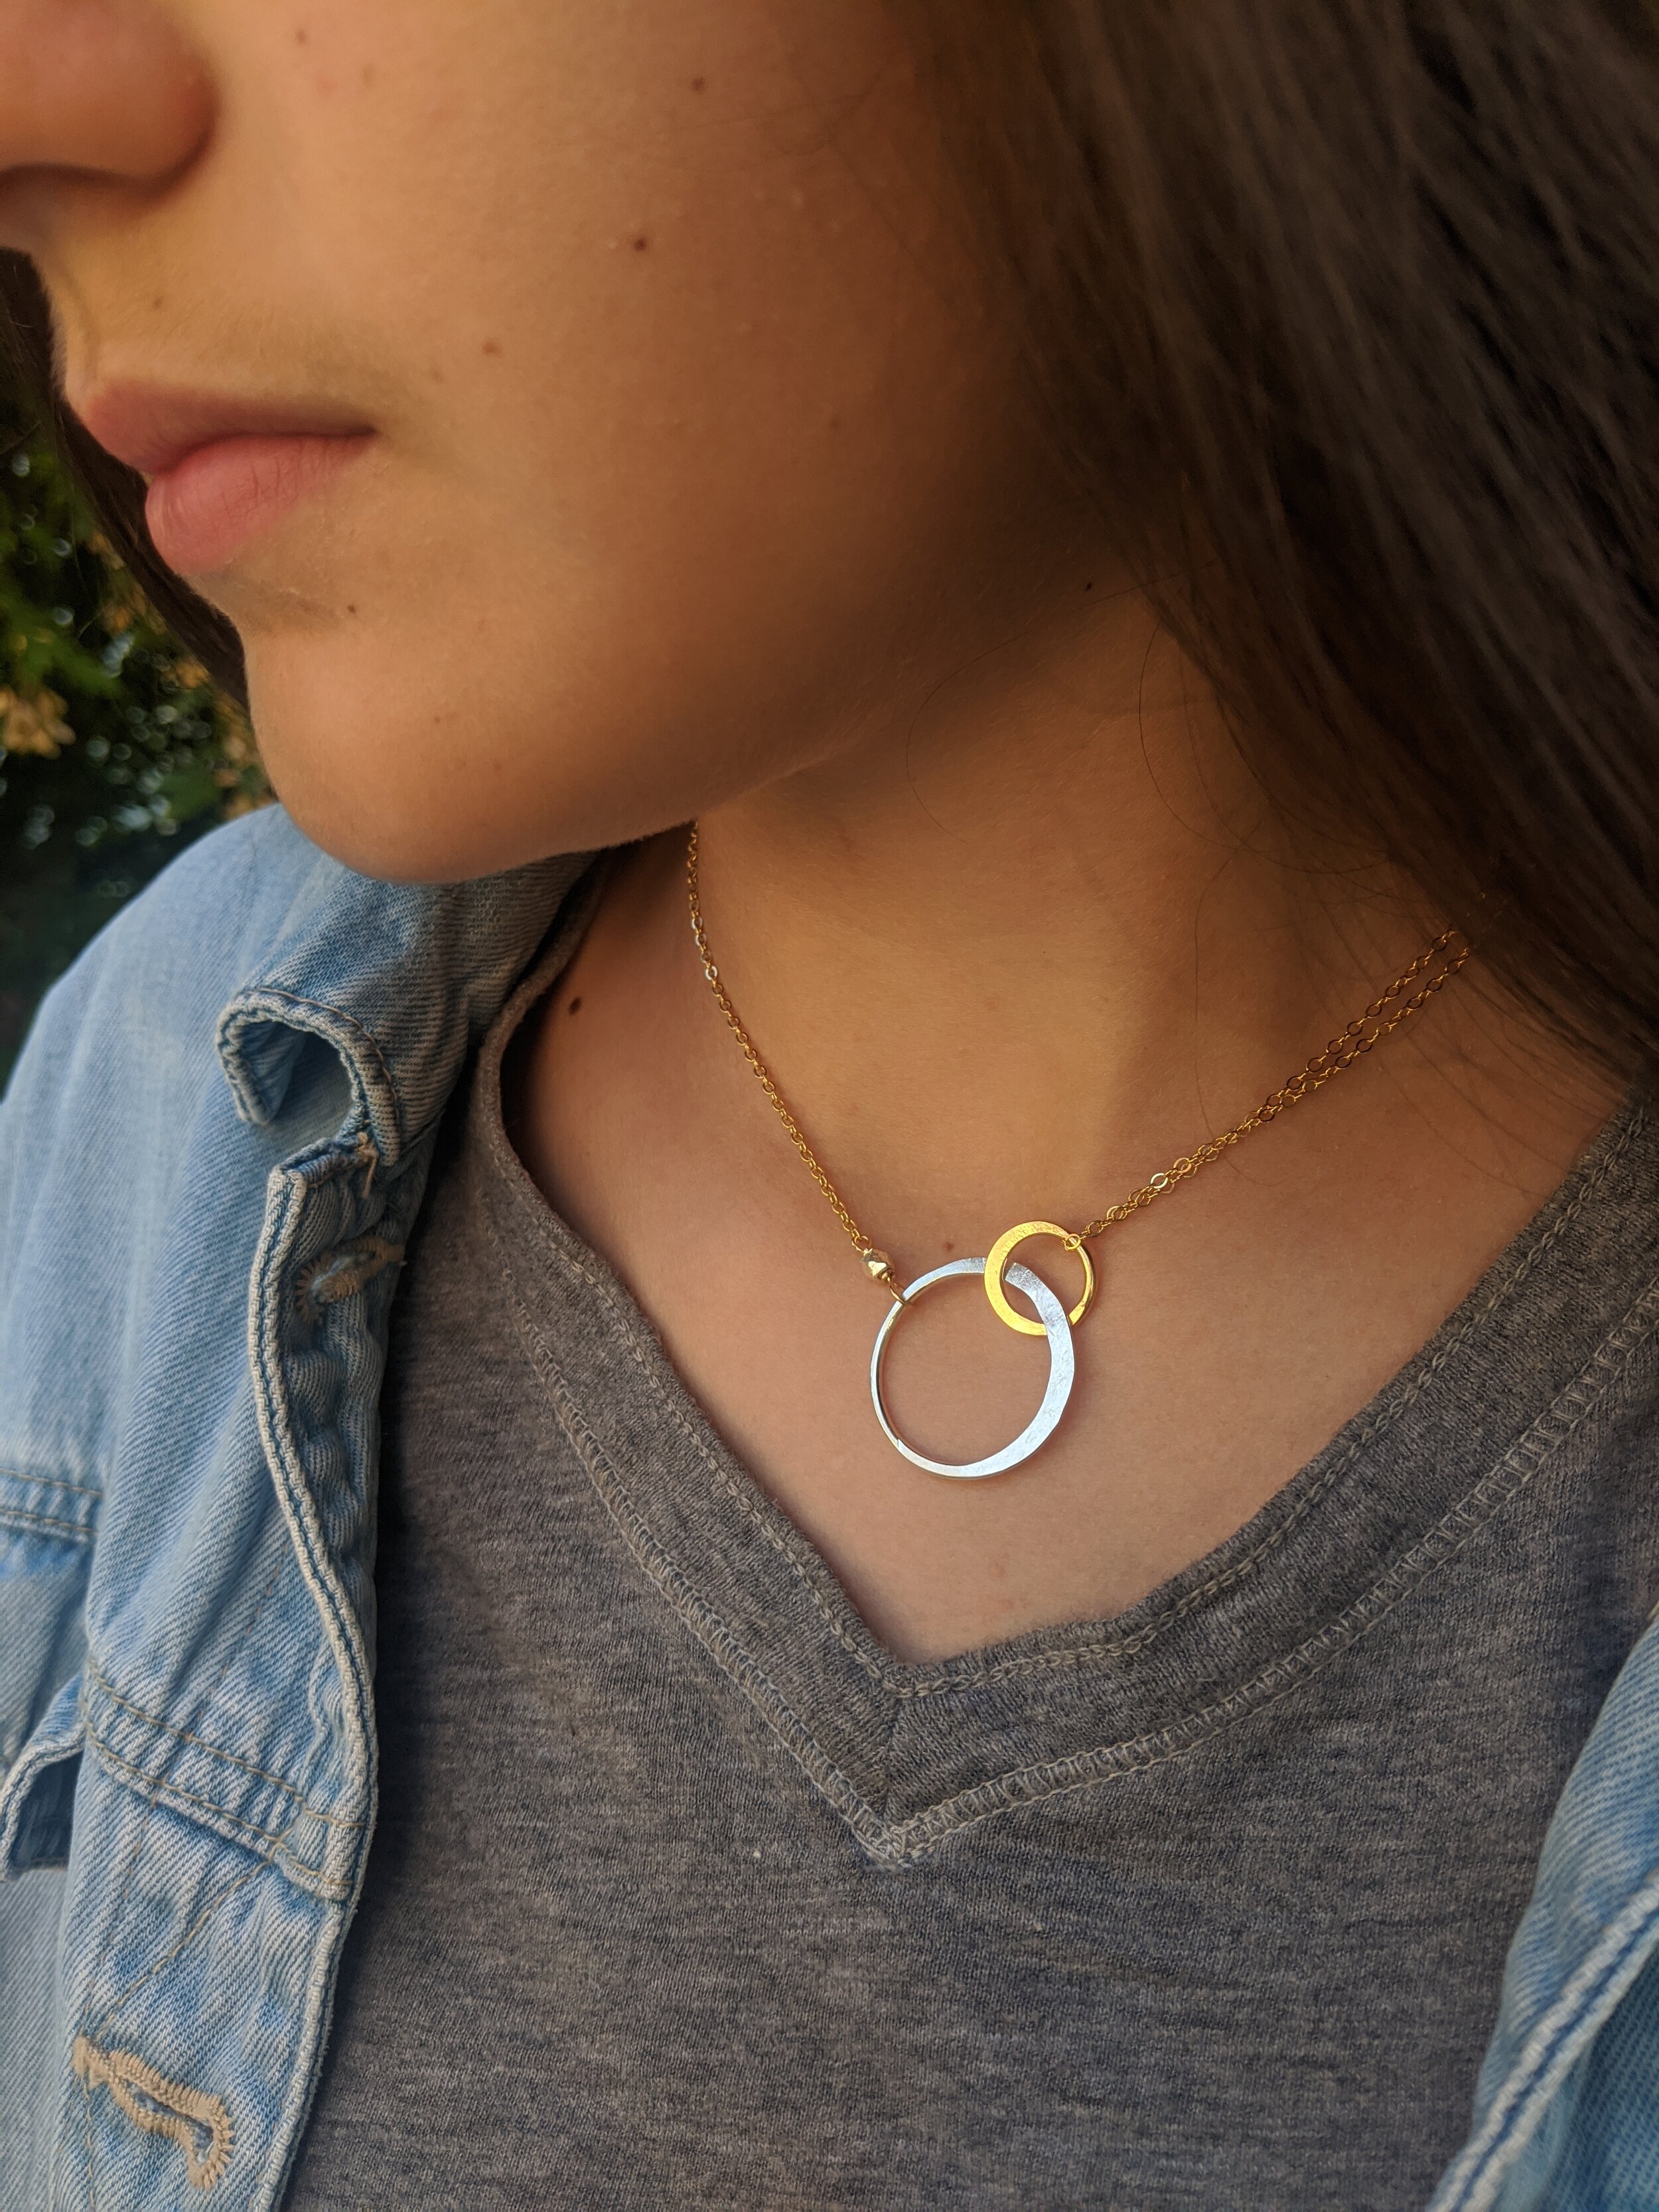 9ct Yellow Gold on Silver CZ Interlocking Circle Pendant Necklace  Adjustable | eBay